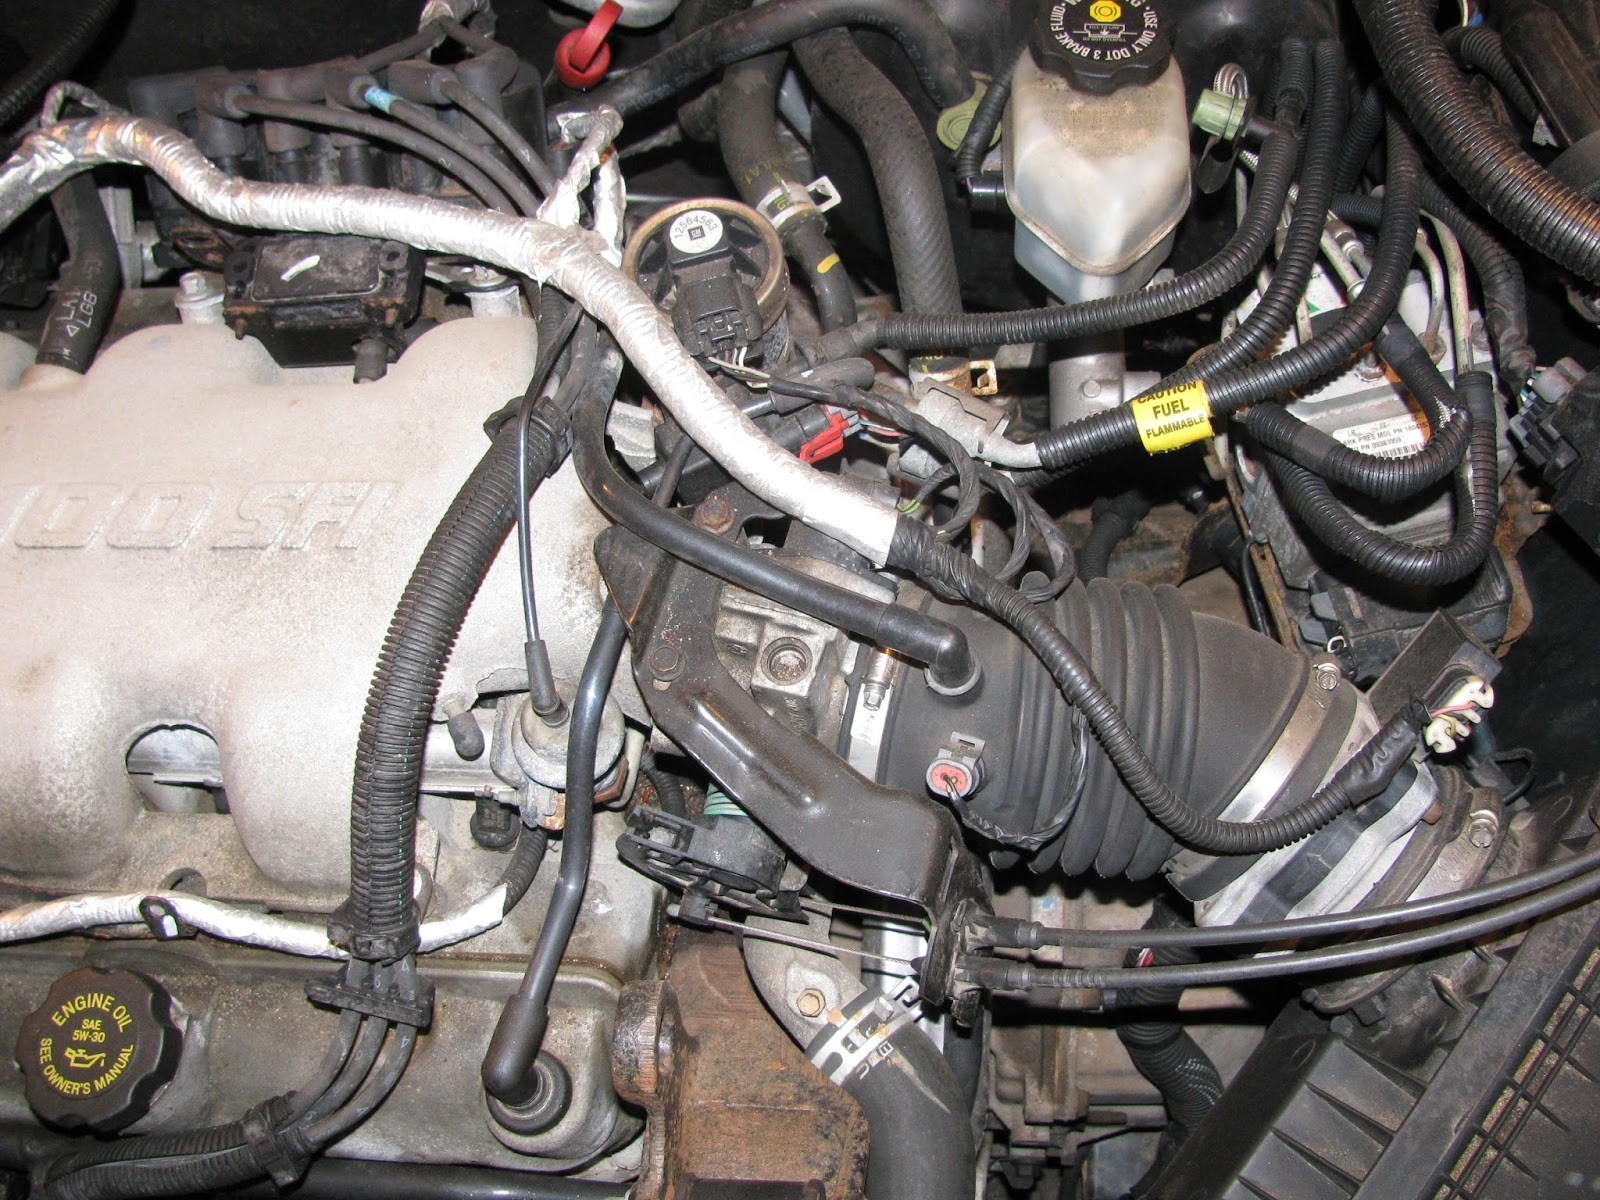 1998 Buick Century Engine Diagram the original Mechanic 3 1l Engine Gm Replacing Intake Manifold